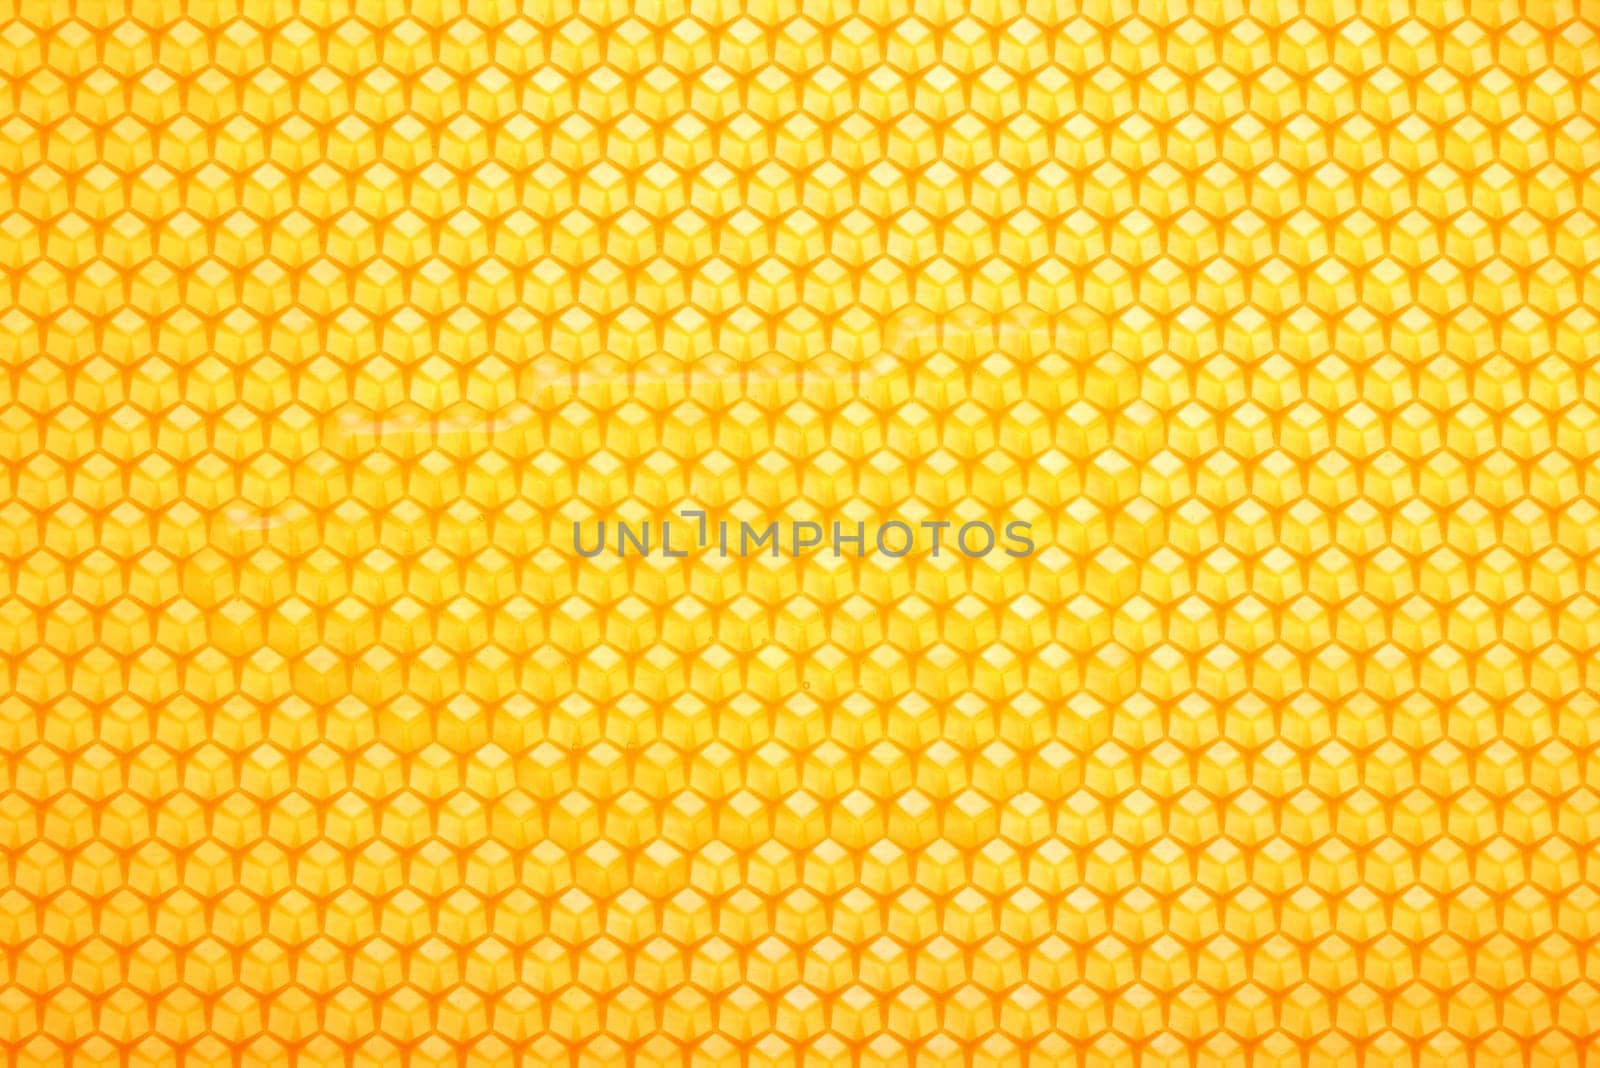 Close up fresh golden comb honey background texture, full frame honeycomb pattern